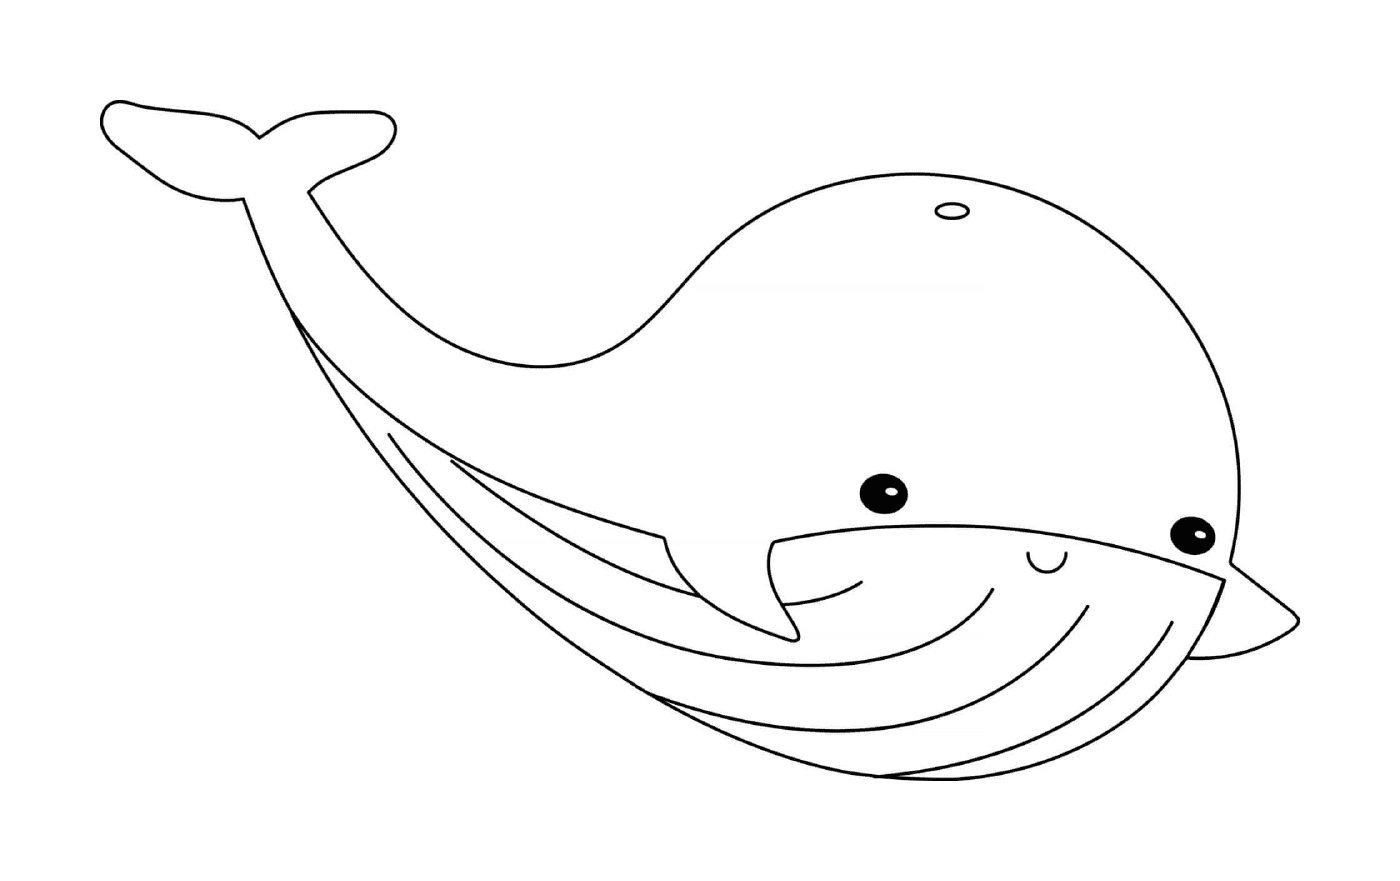  Bella balena marina 